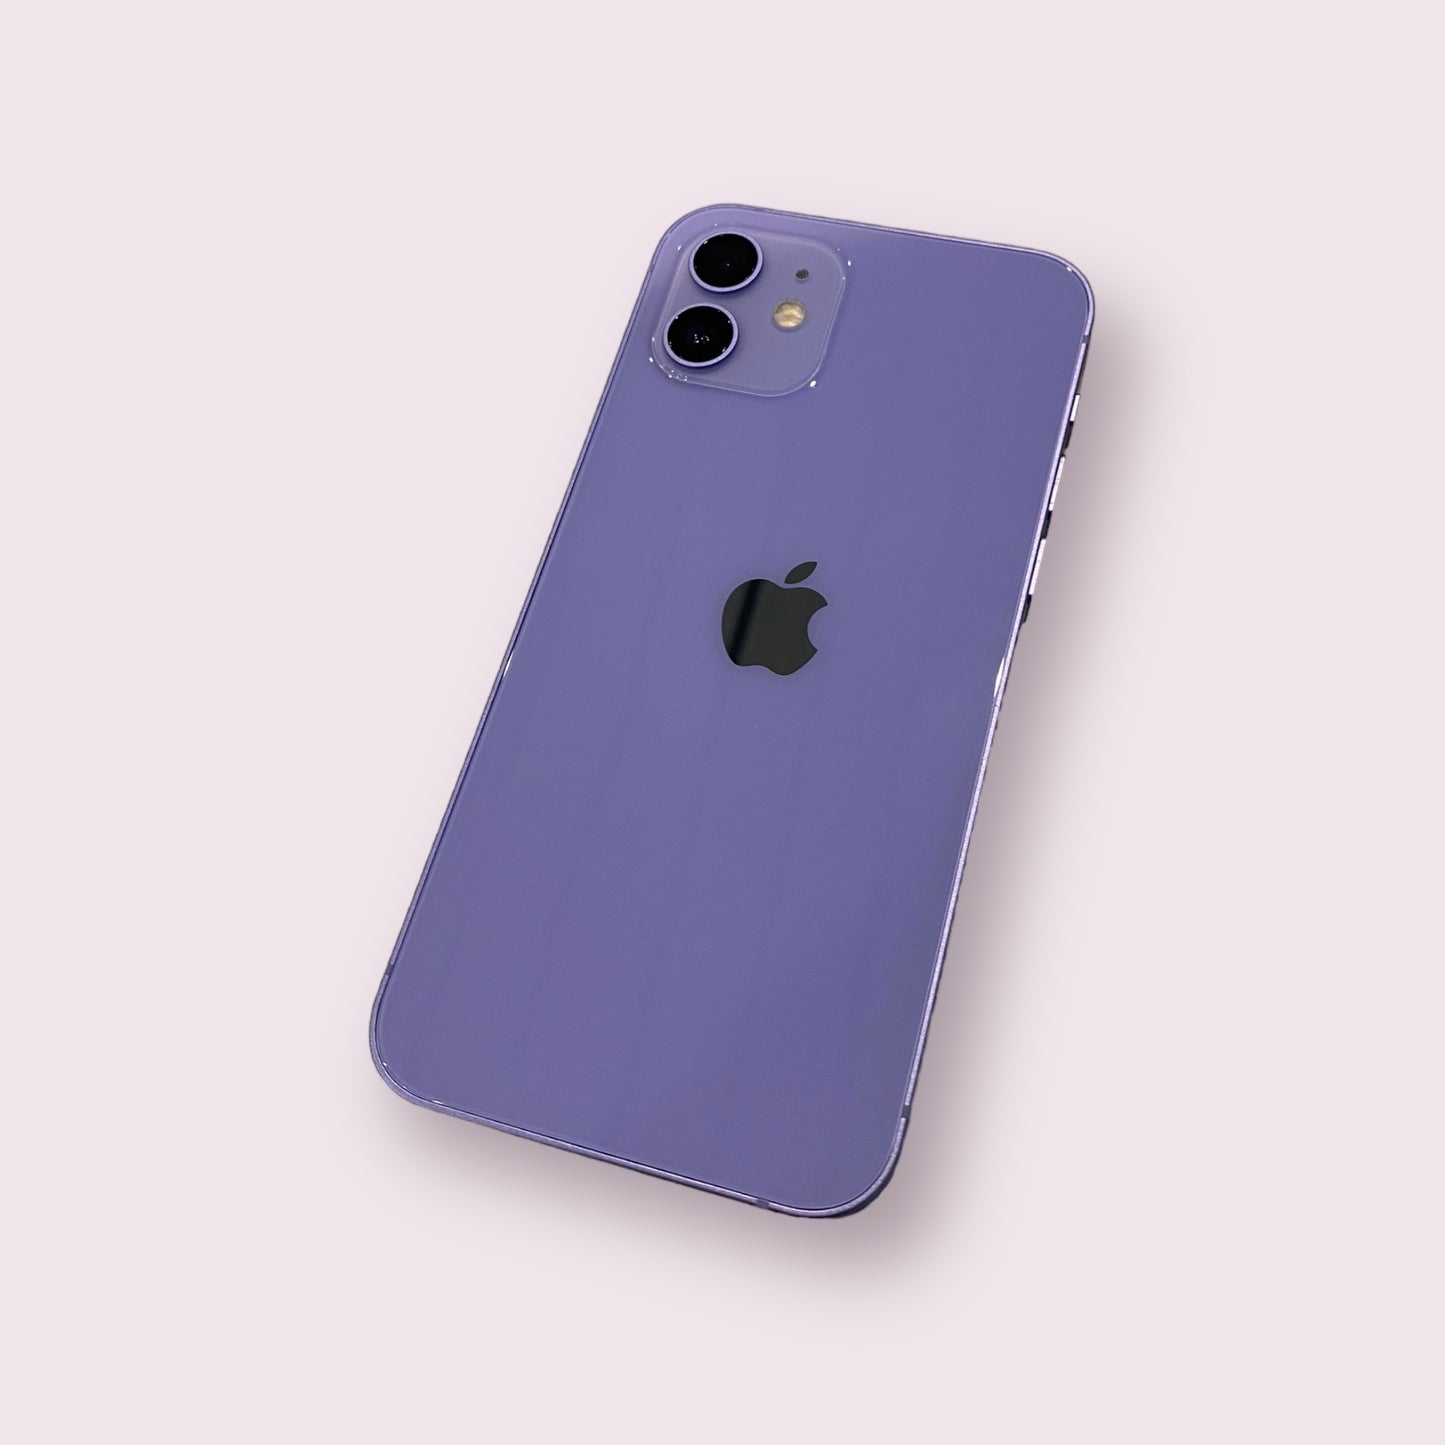 Apple iPhone 12 64GB Lavender Purple - Unlocked - Grade A